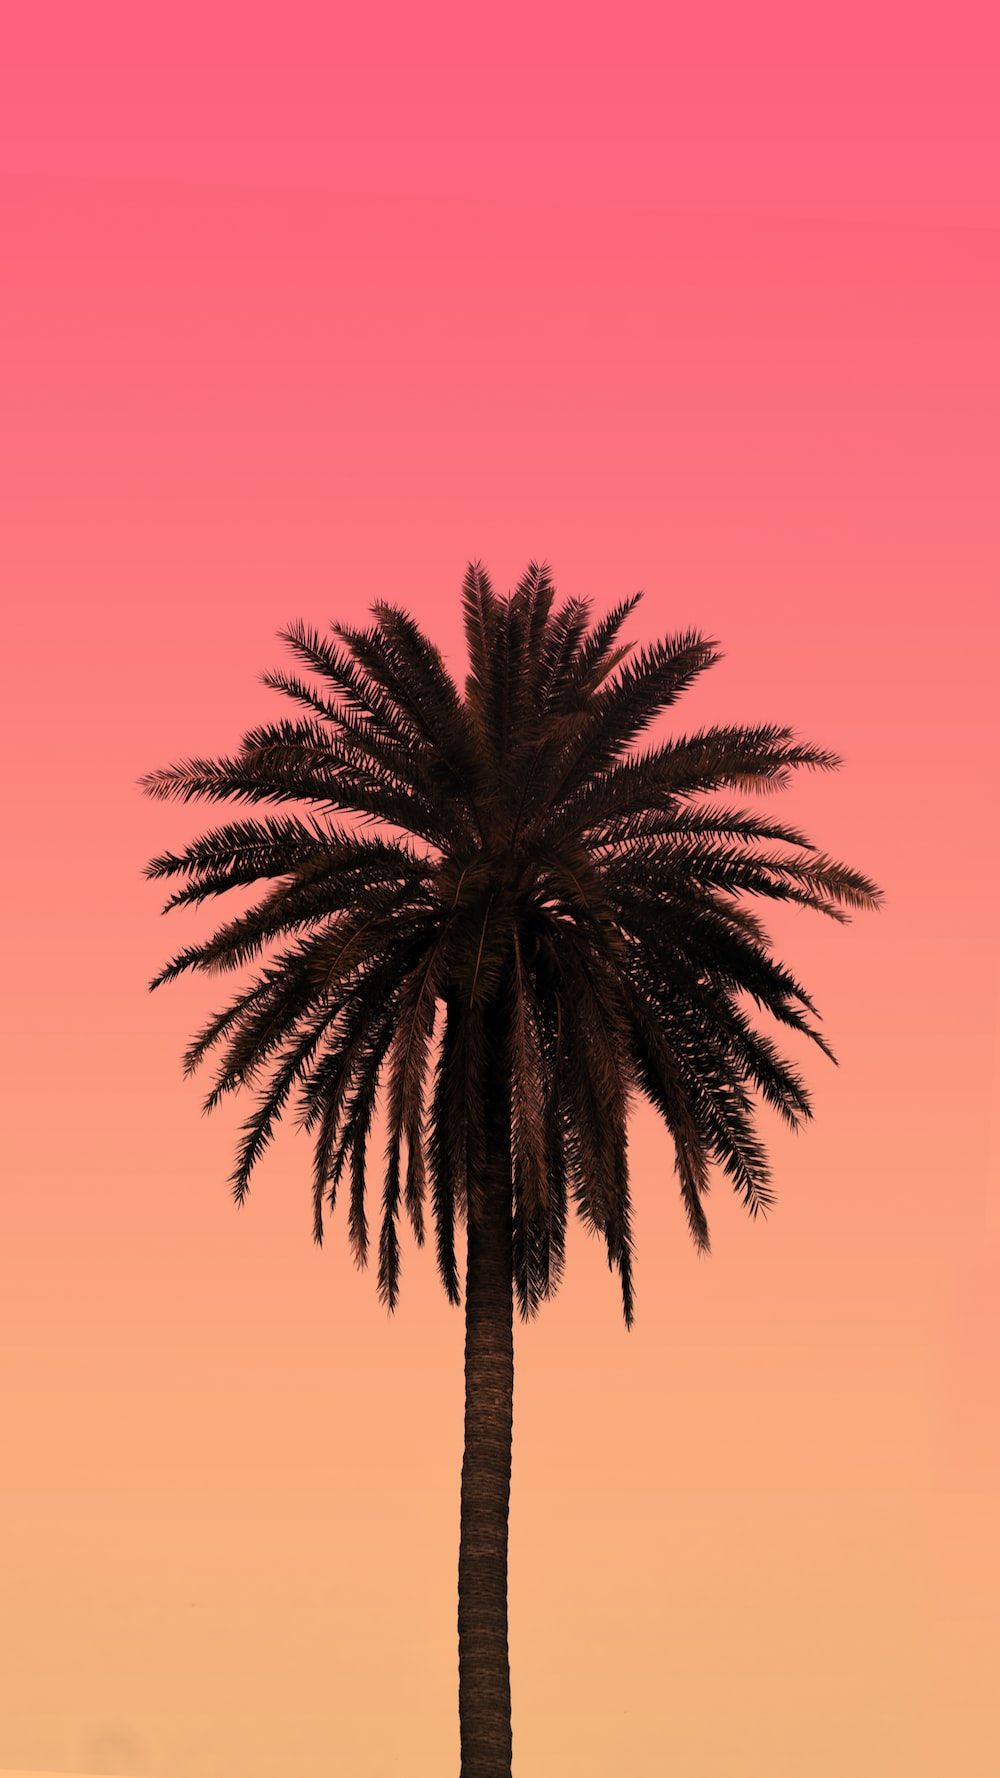 Free Palm tree Image